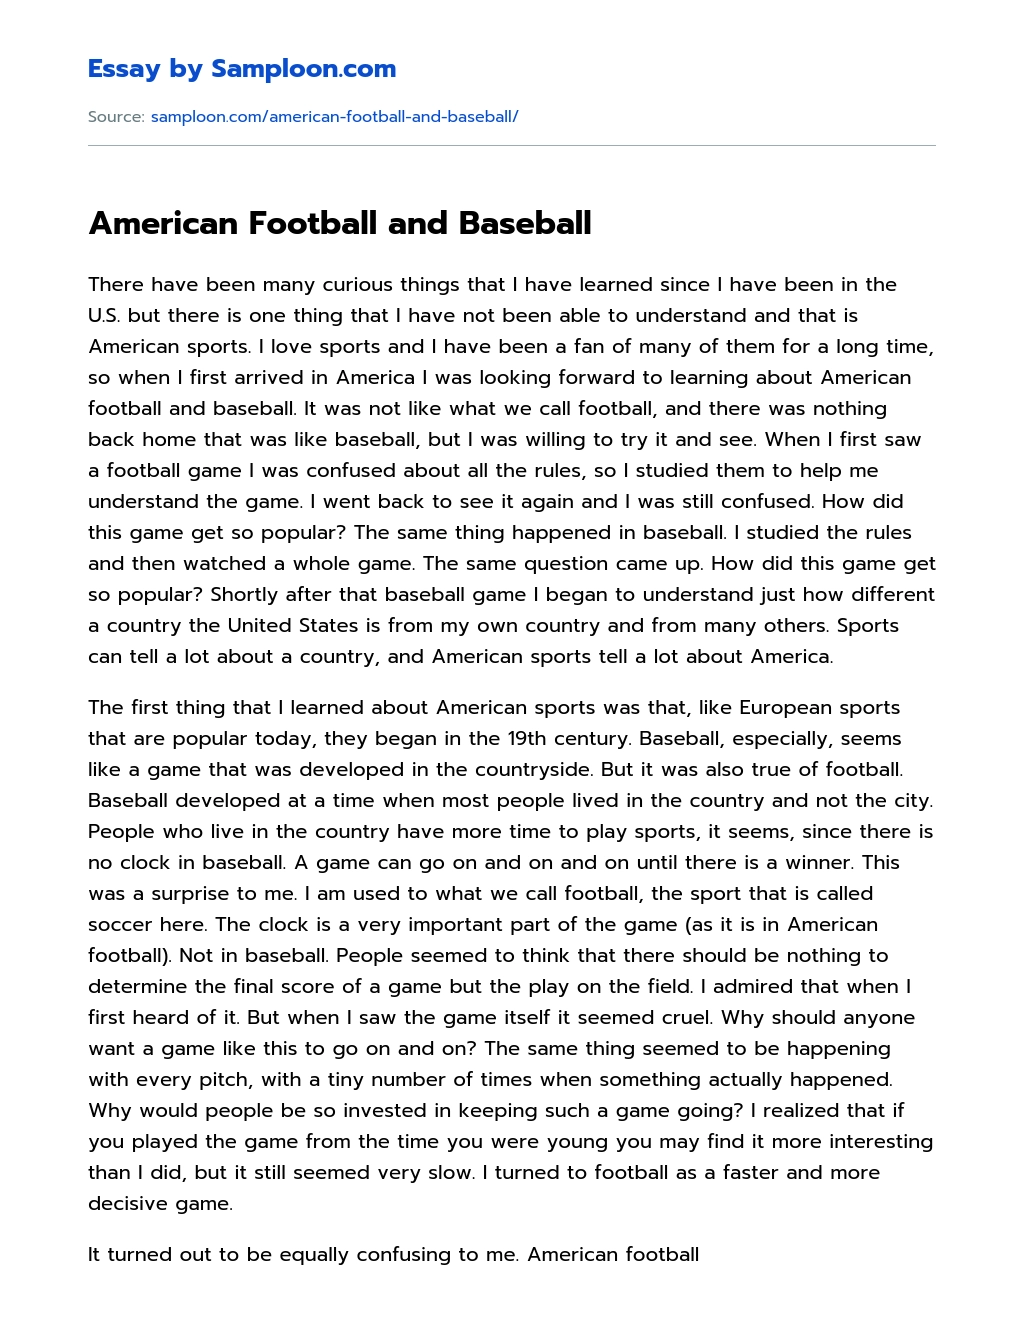 American Football and Baseball essay